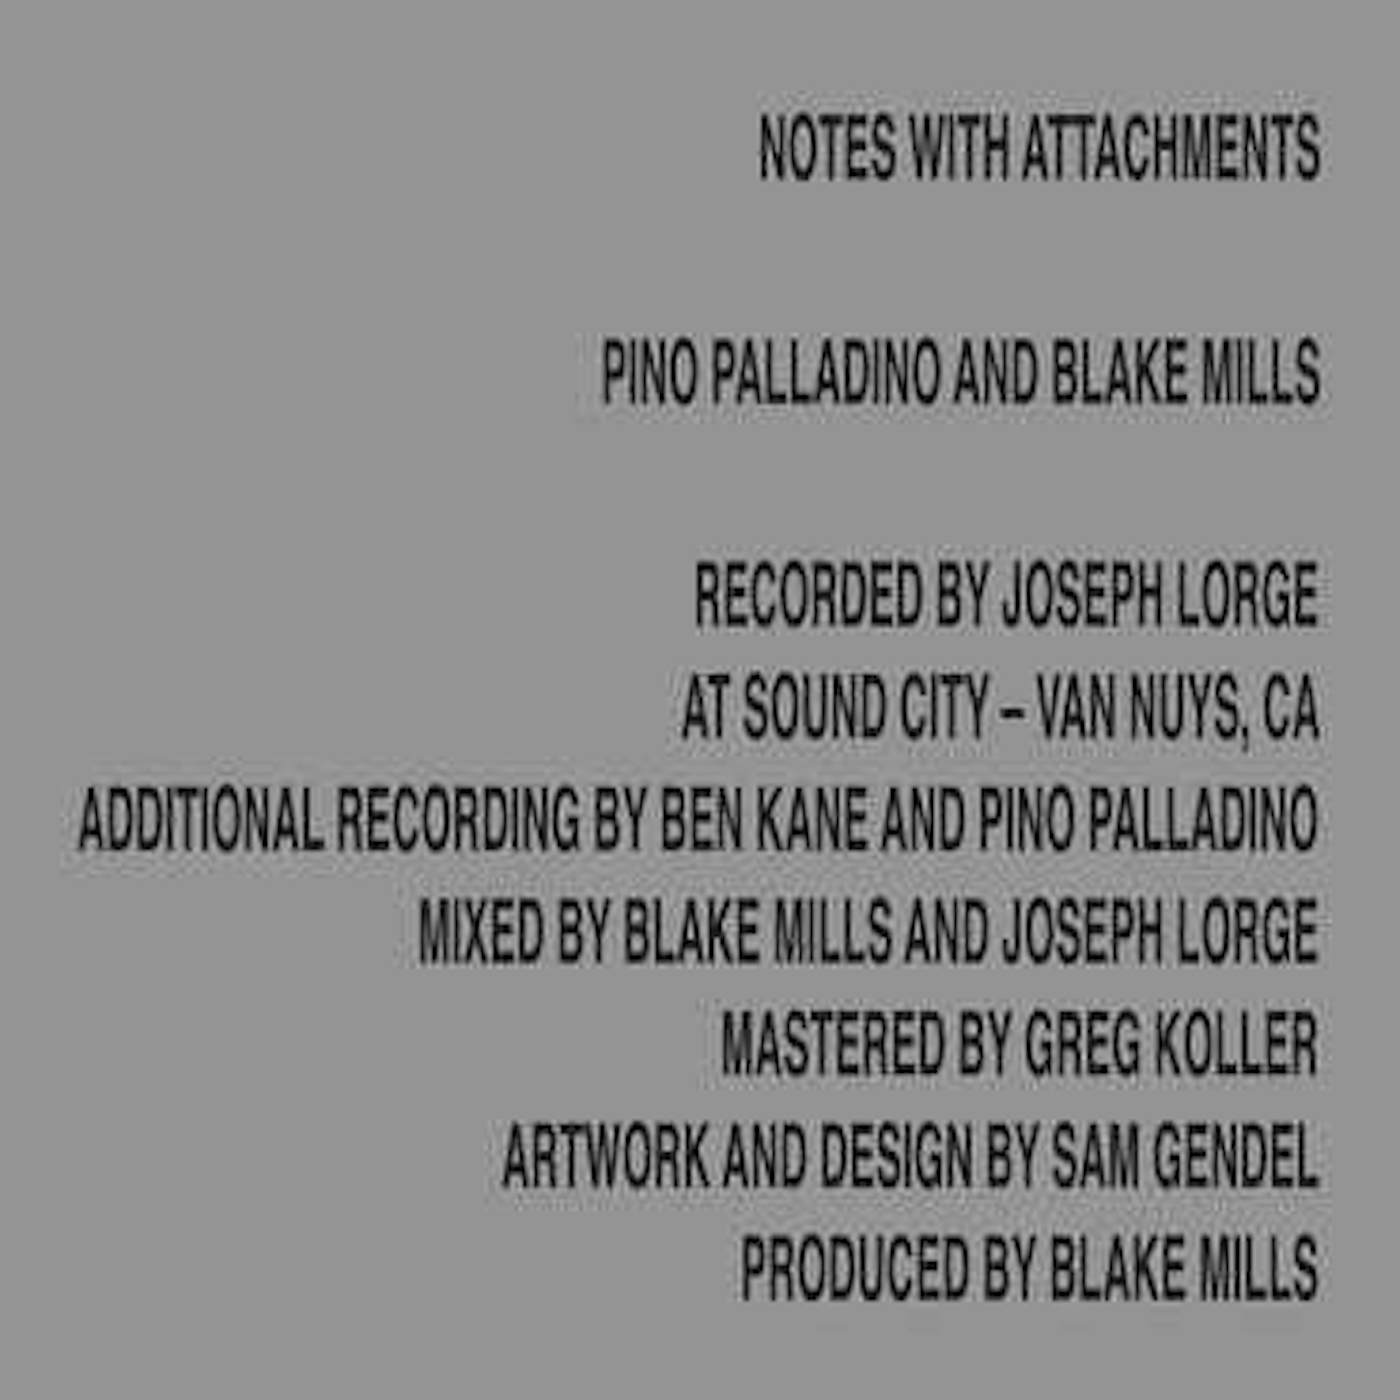 Pino Palladino / Blake Mills Notes With Attachments Vinyl Record